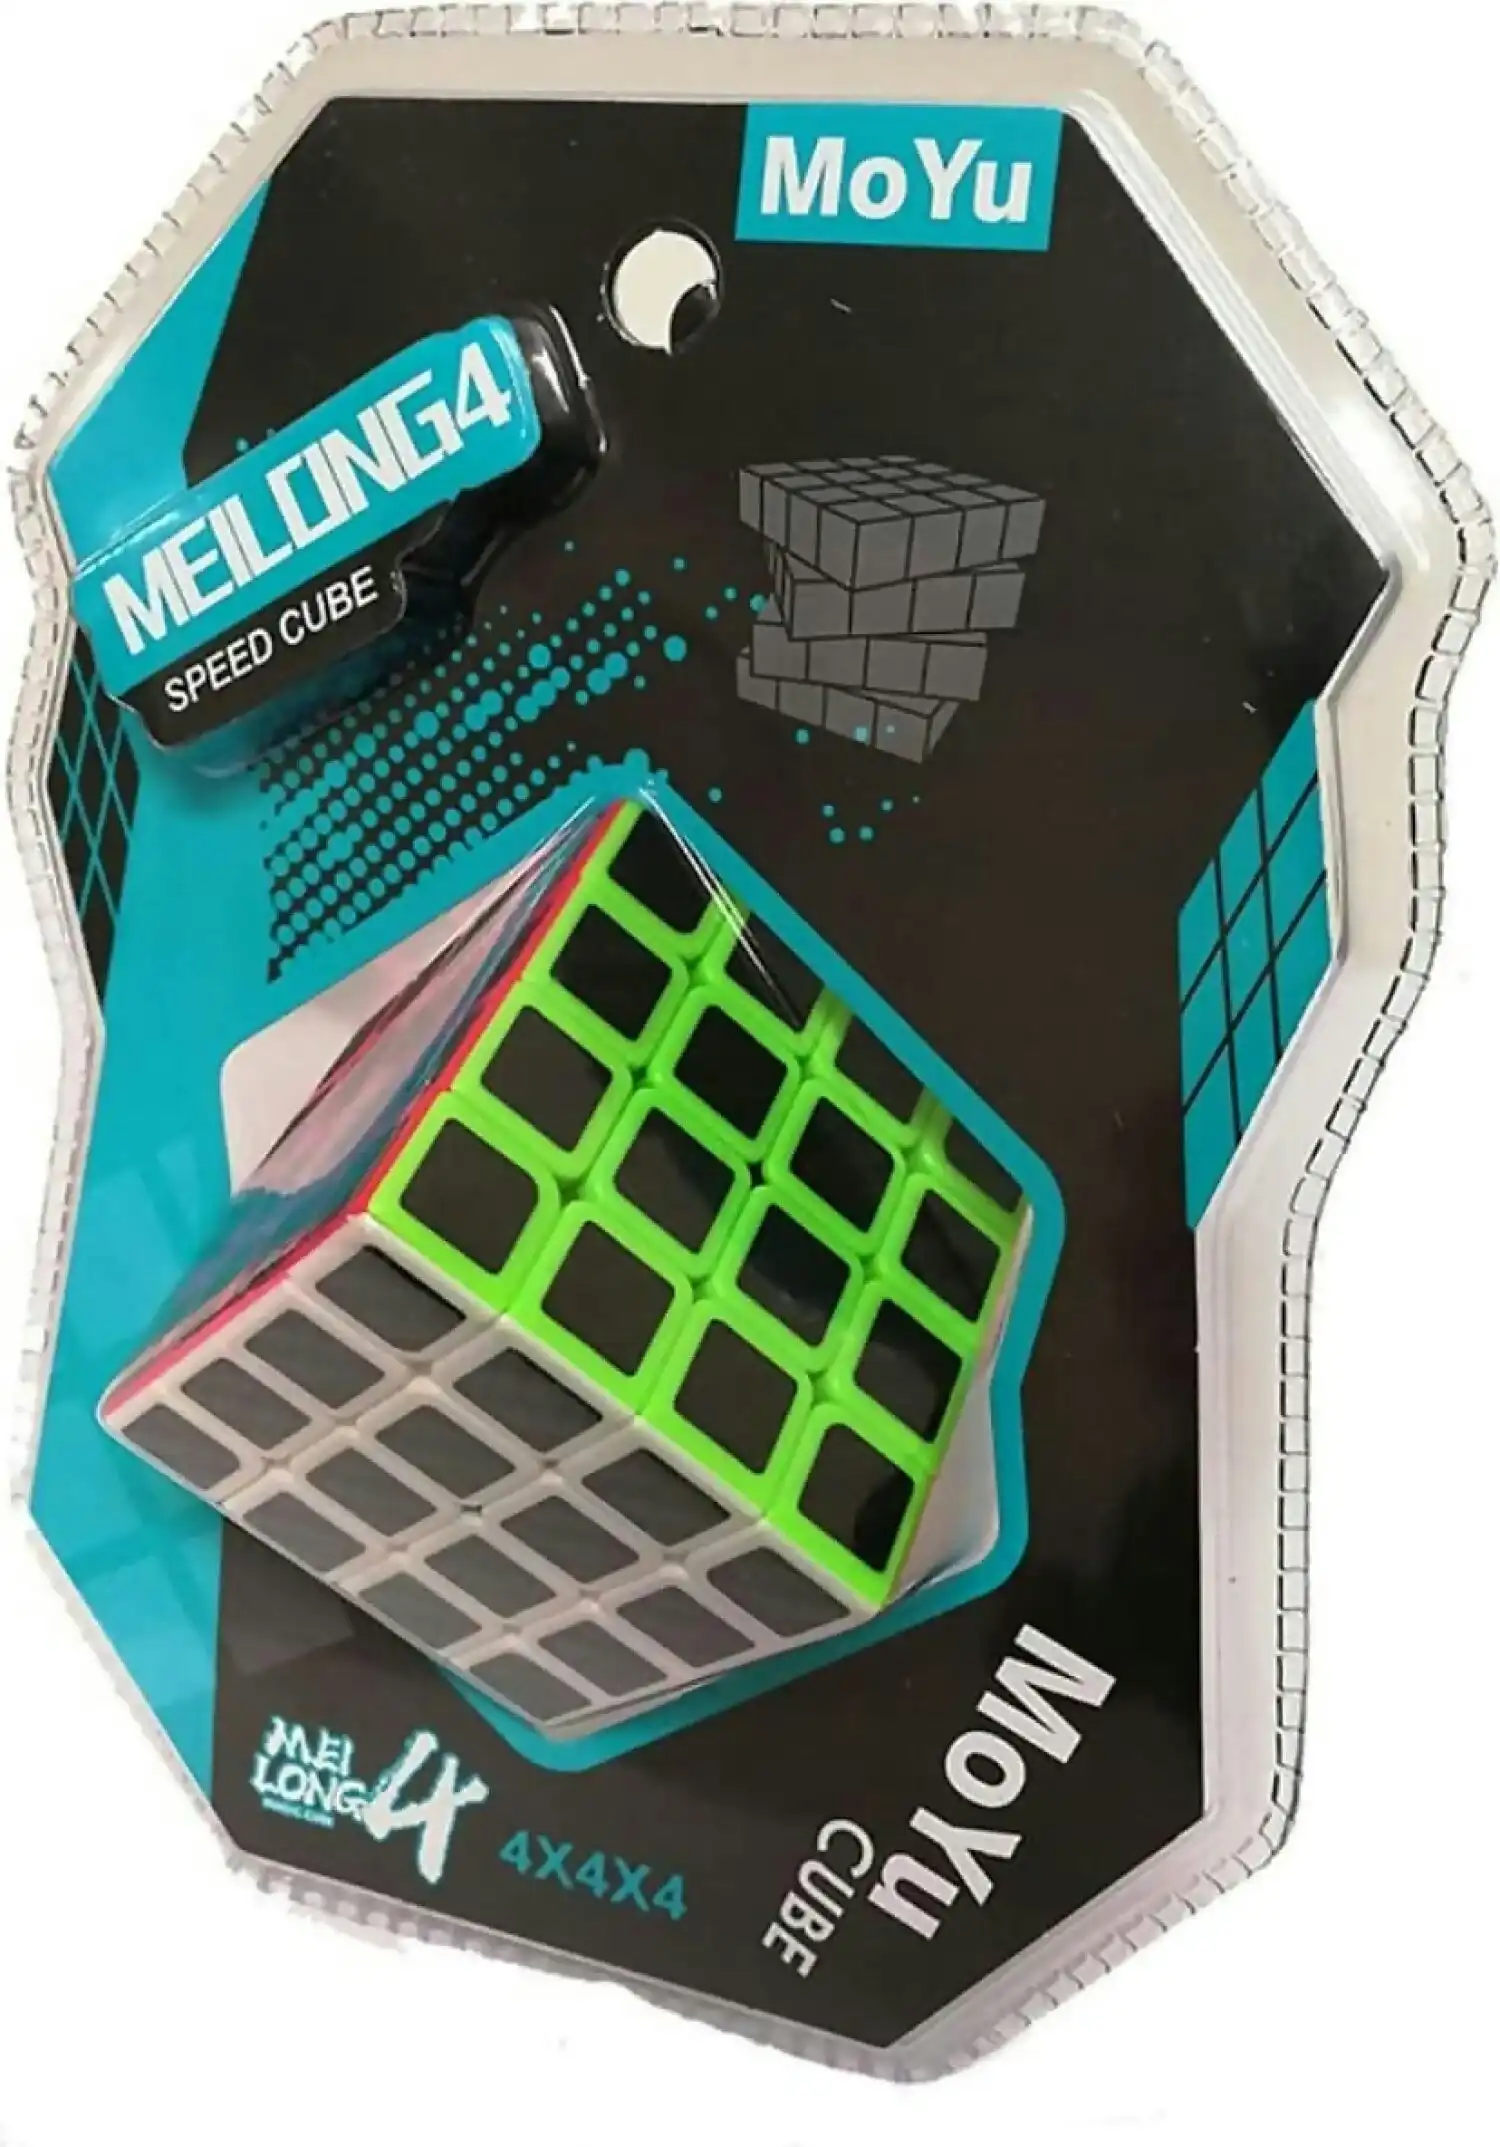 MoYu - Meilong 4 X 4 Speed Cube Blister Pack